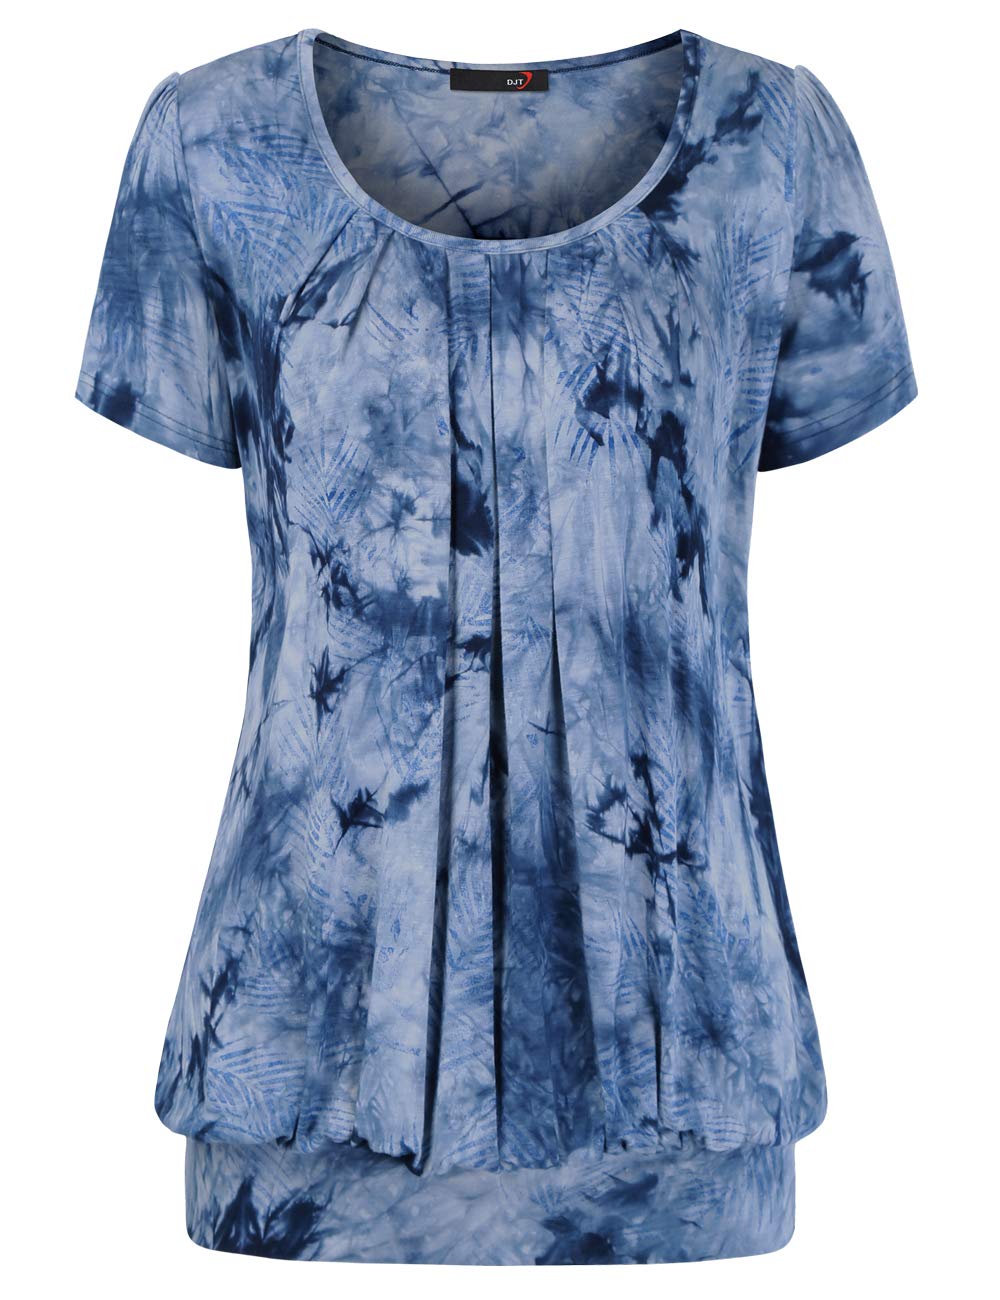 DJT Tie Dye Blue Leaves Women's Scoop Neck Short Sleeve Pleated Front Blouse Tunic Top